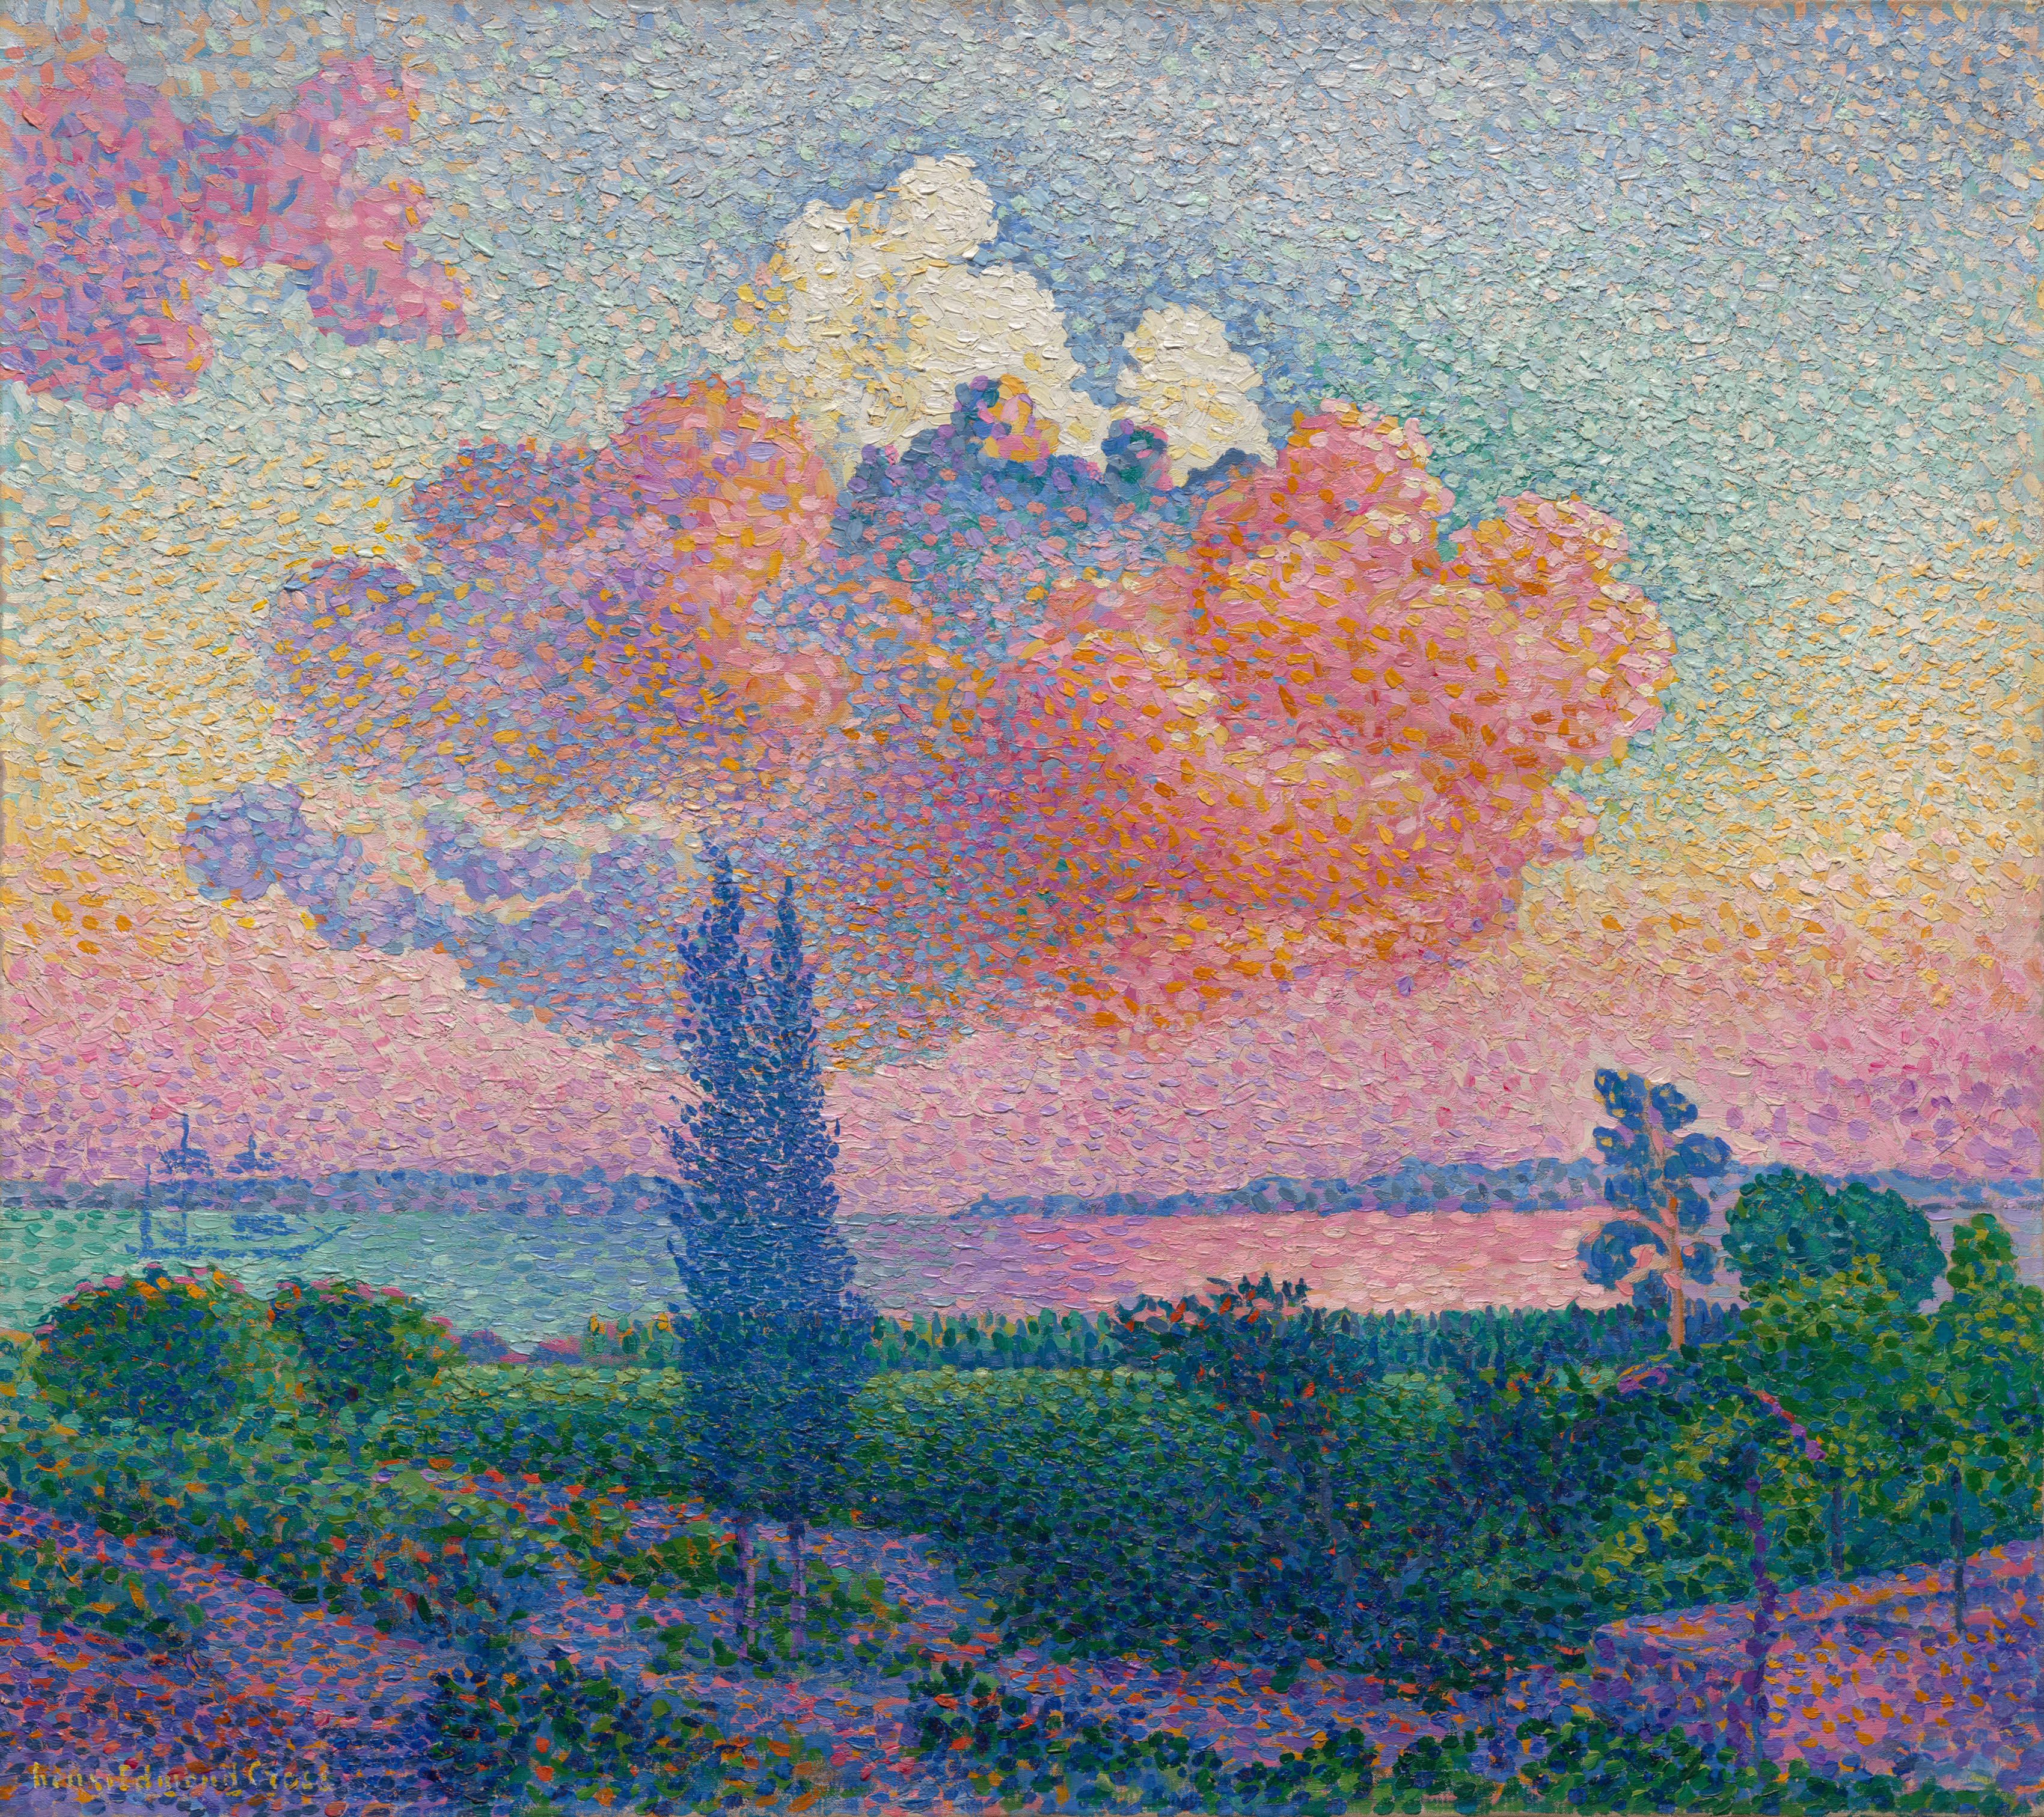 The Pink Cloud by Henri-Edmond Cross - c. 1896 - 54.6 x 61 cm Cleveland Museum of Art